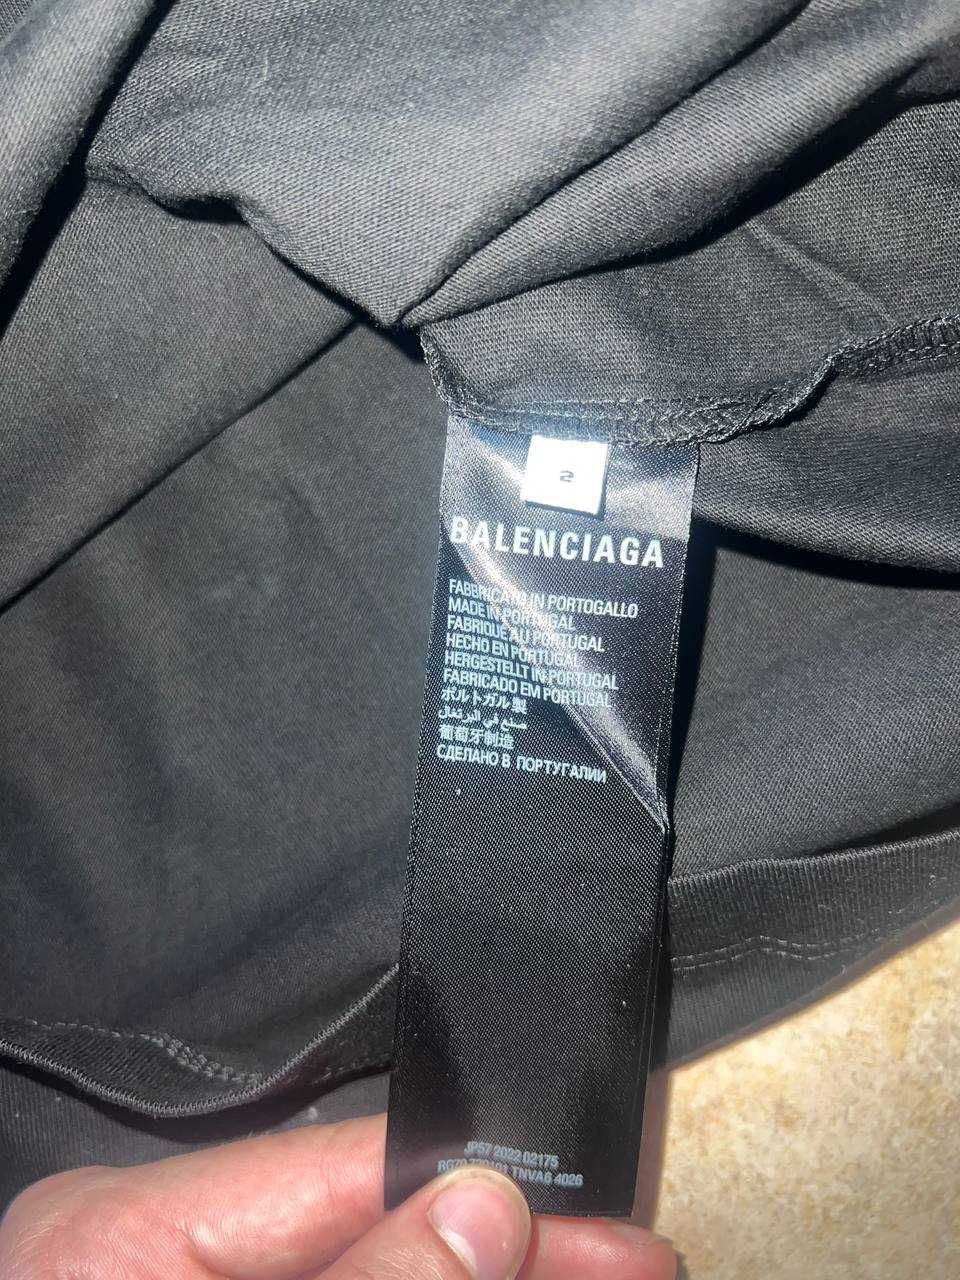 Balenciaga Adidas koszulka czarna